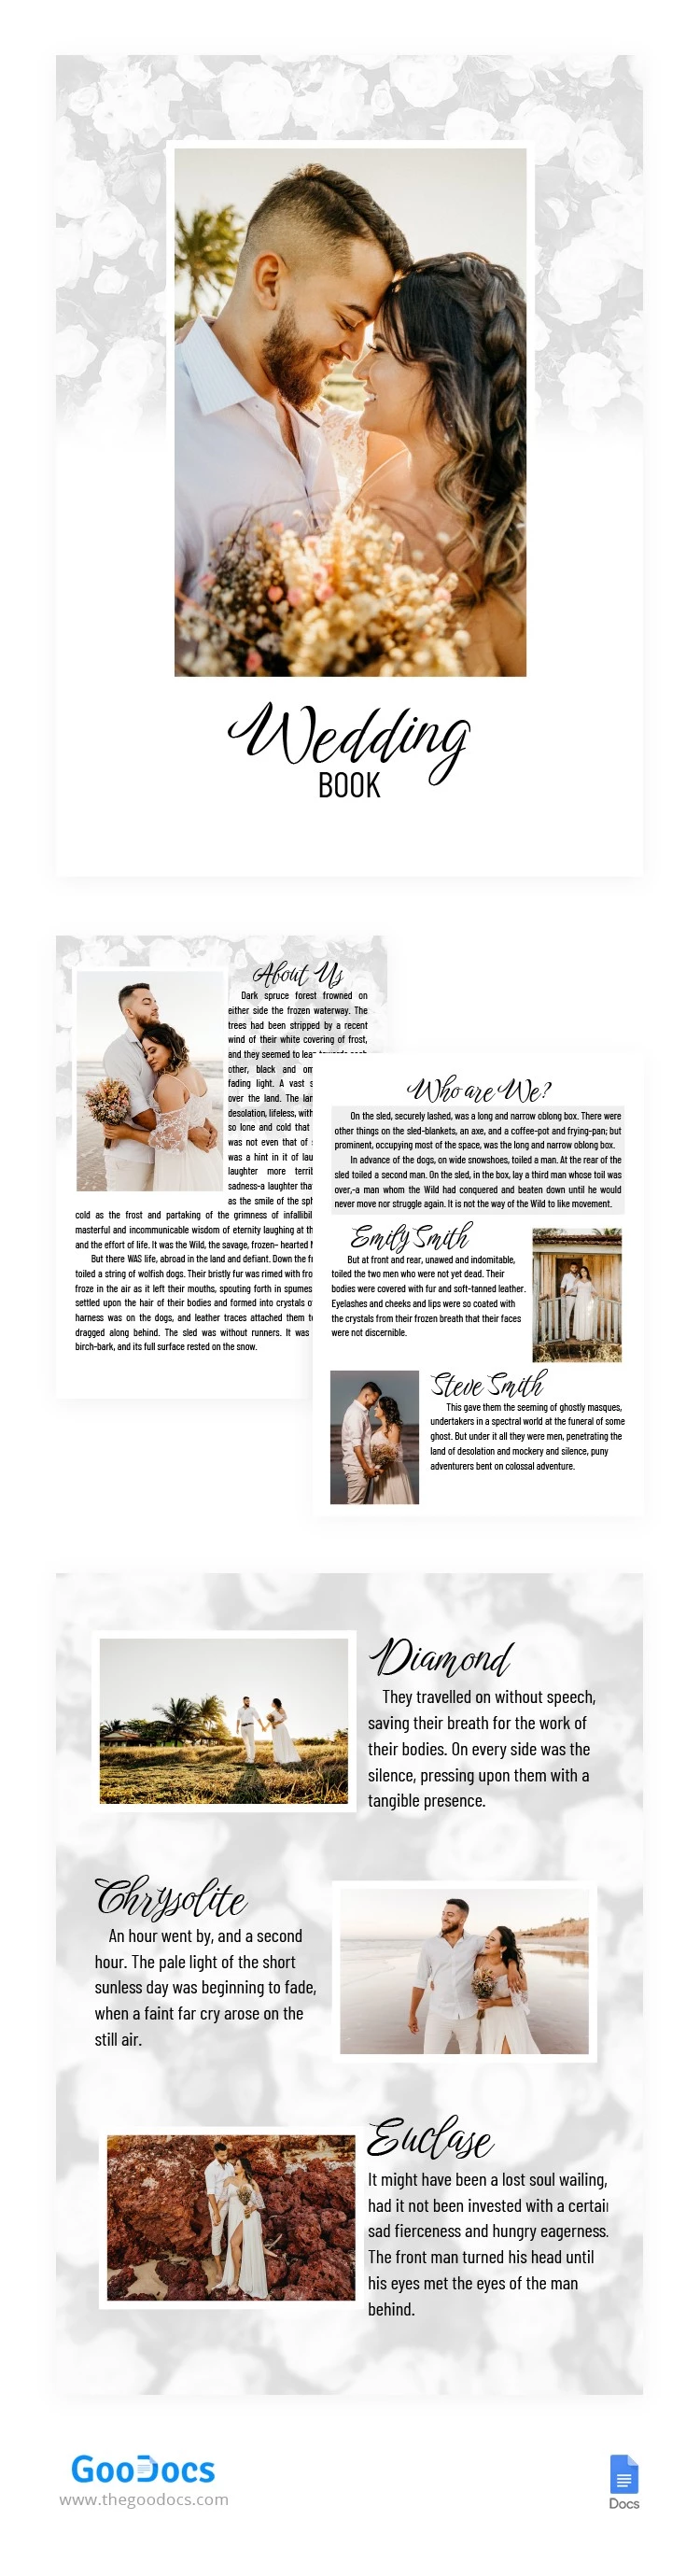 Floral Wedding Book - free Google Docs Template - 10064683